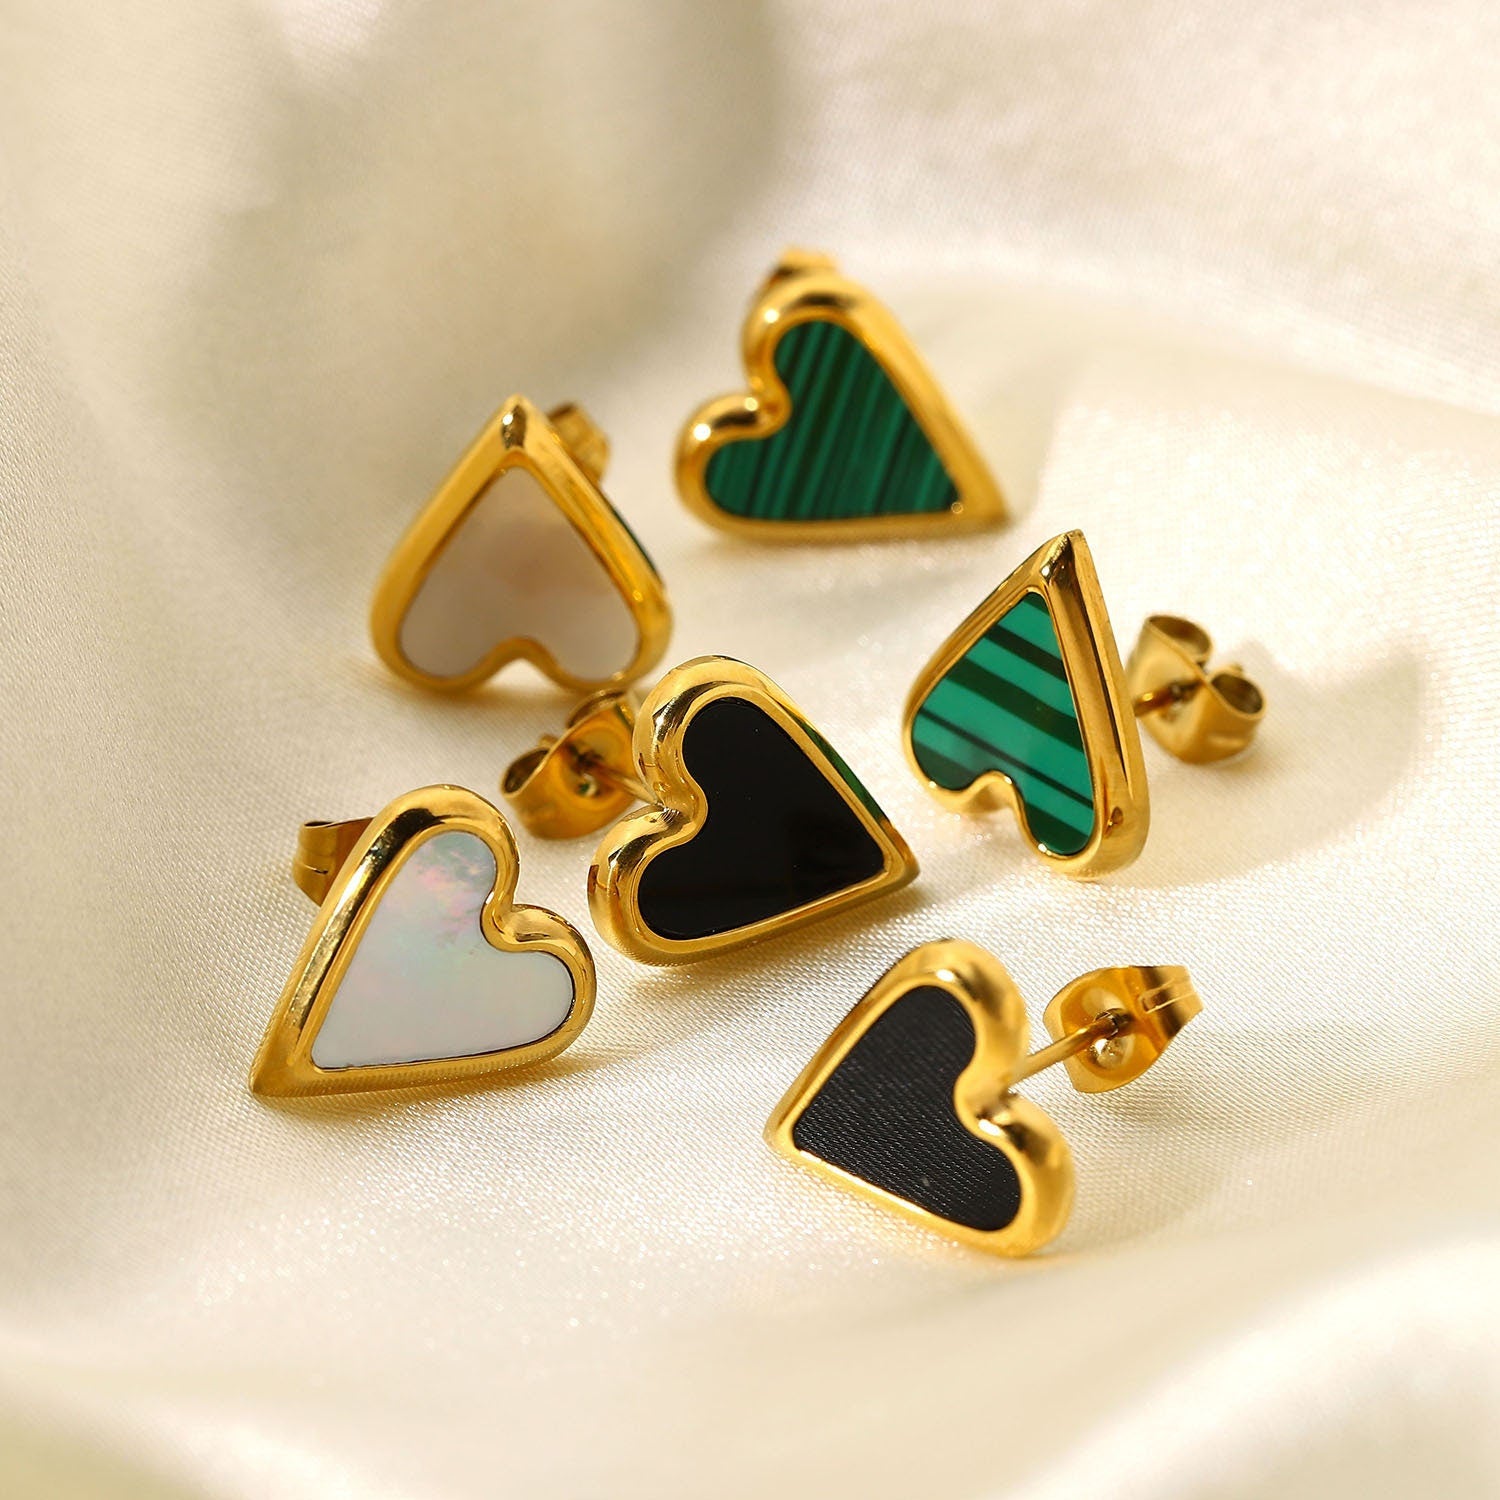 Chunky Gold Plated Heart Earrings, Shell Heart Stainless Steel Stud Earring